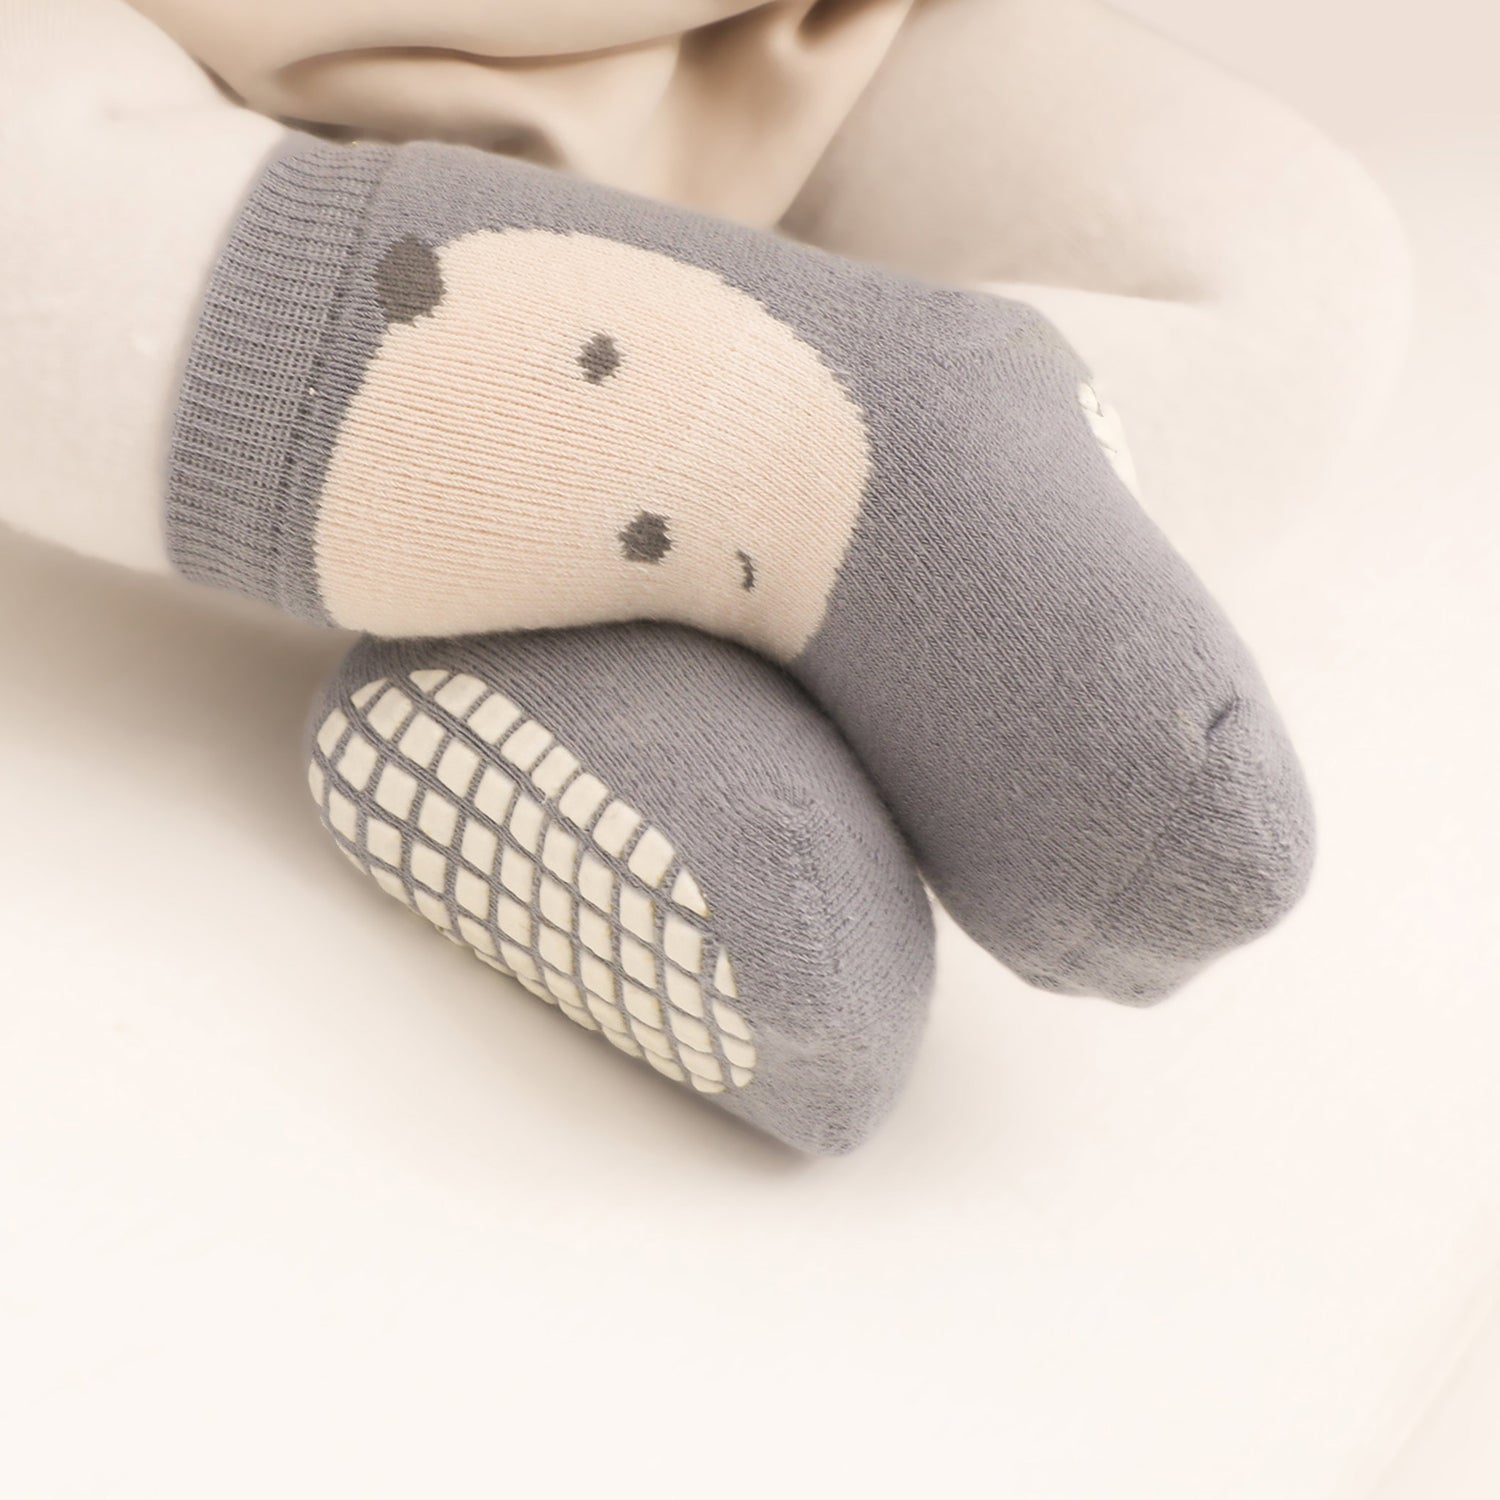 Non slip infant socks with sensory-friendly fabric